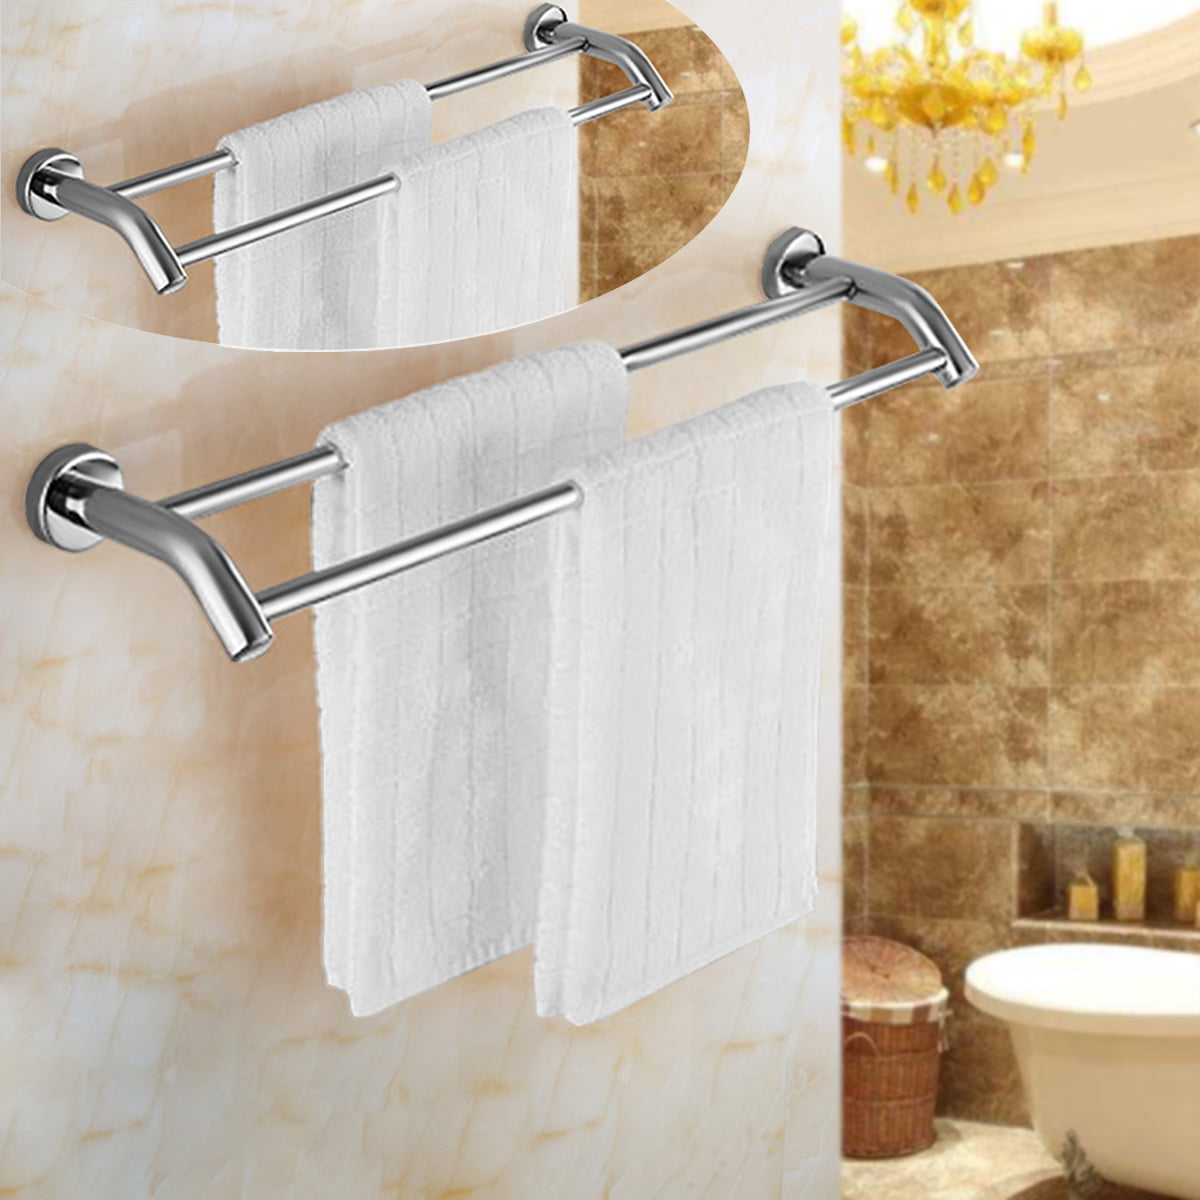 Towel Rack Double Top Sellers, UP TO 66% OFF | www.moeembarcelona.com